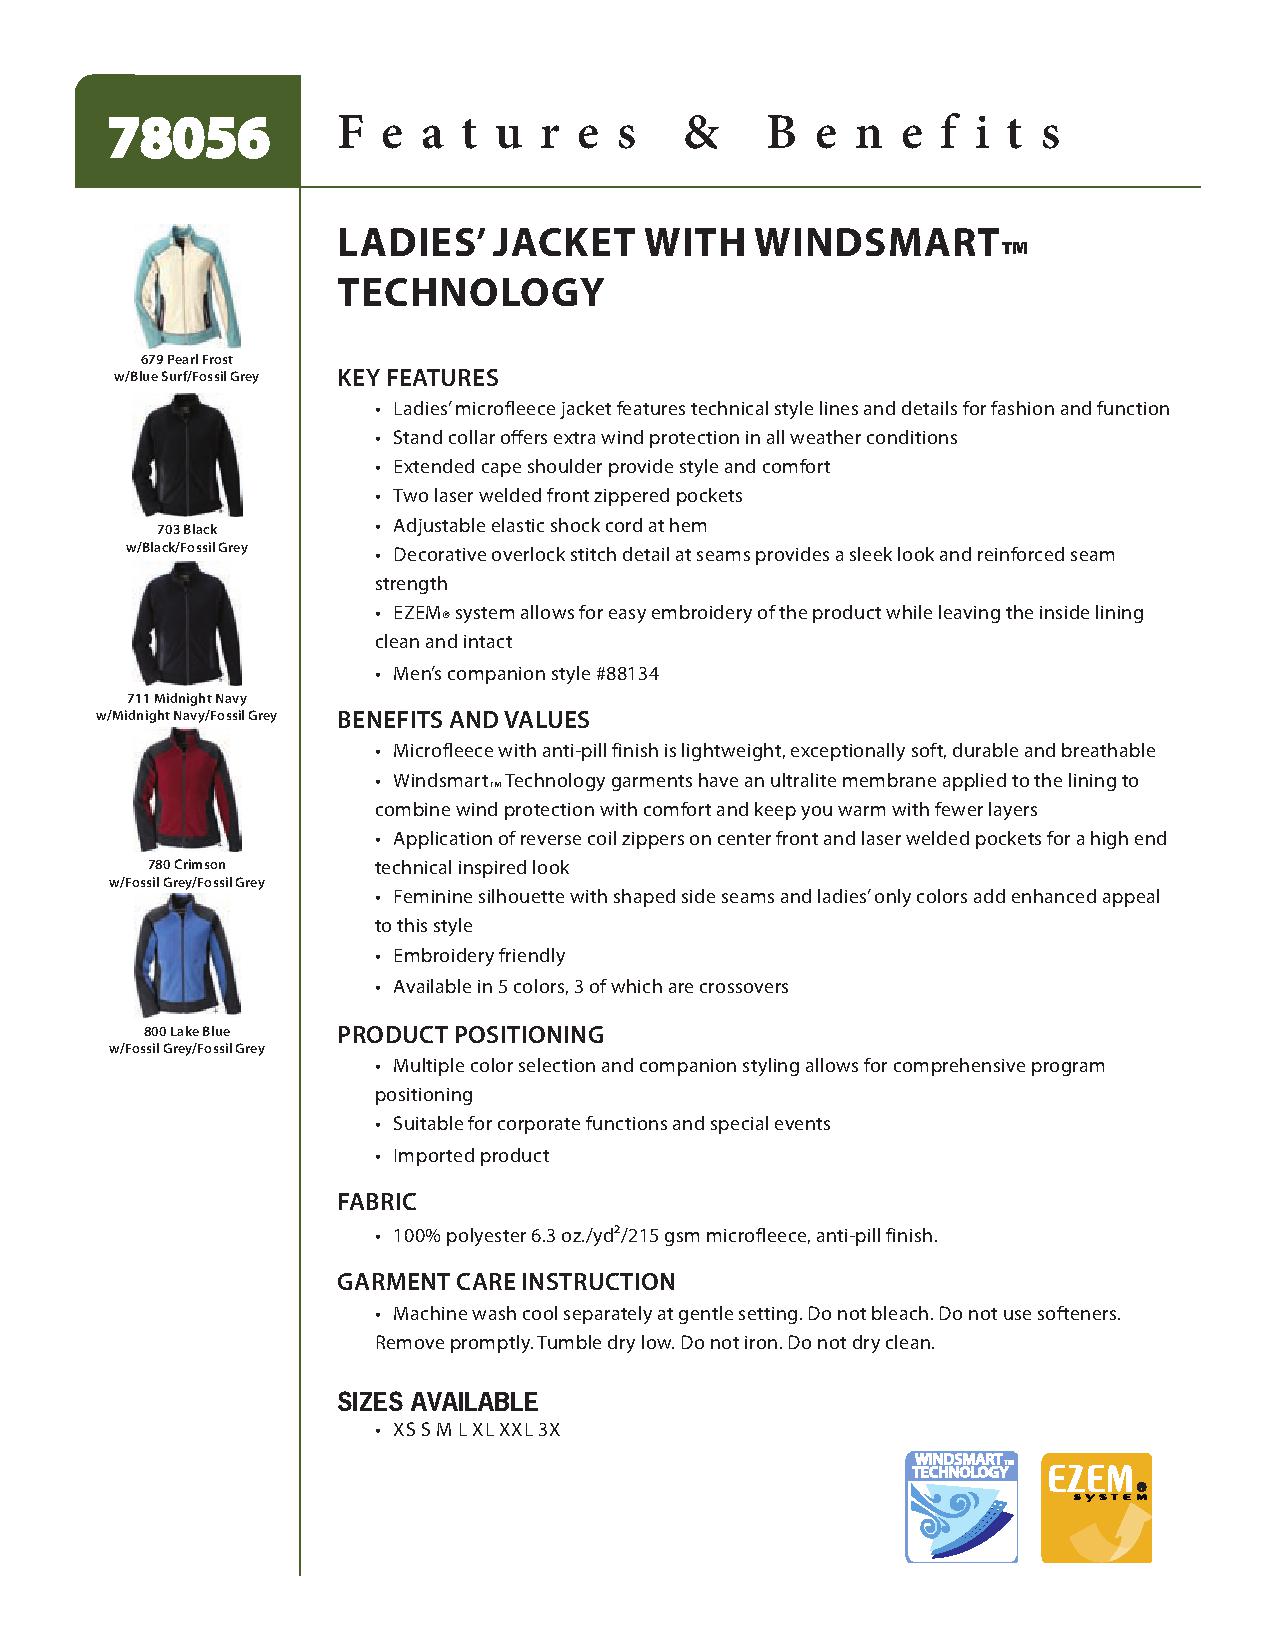 Ash City Microfleece 78056 - Ladies' Jacket With Windsmarttm Technology